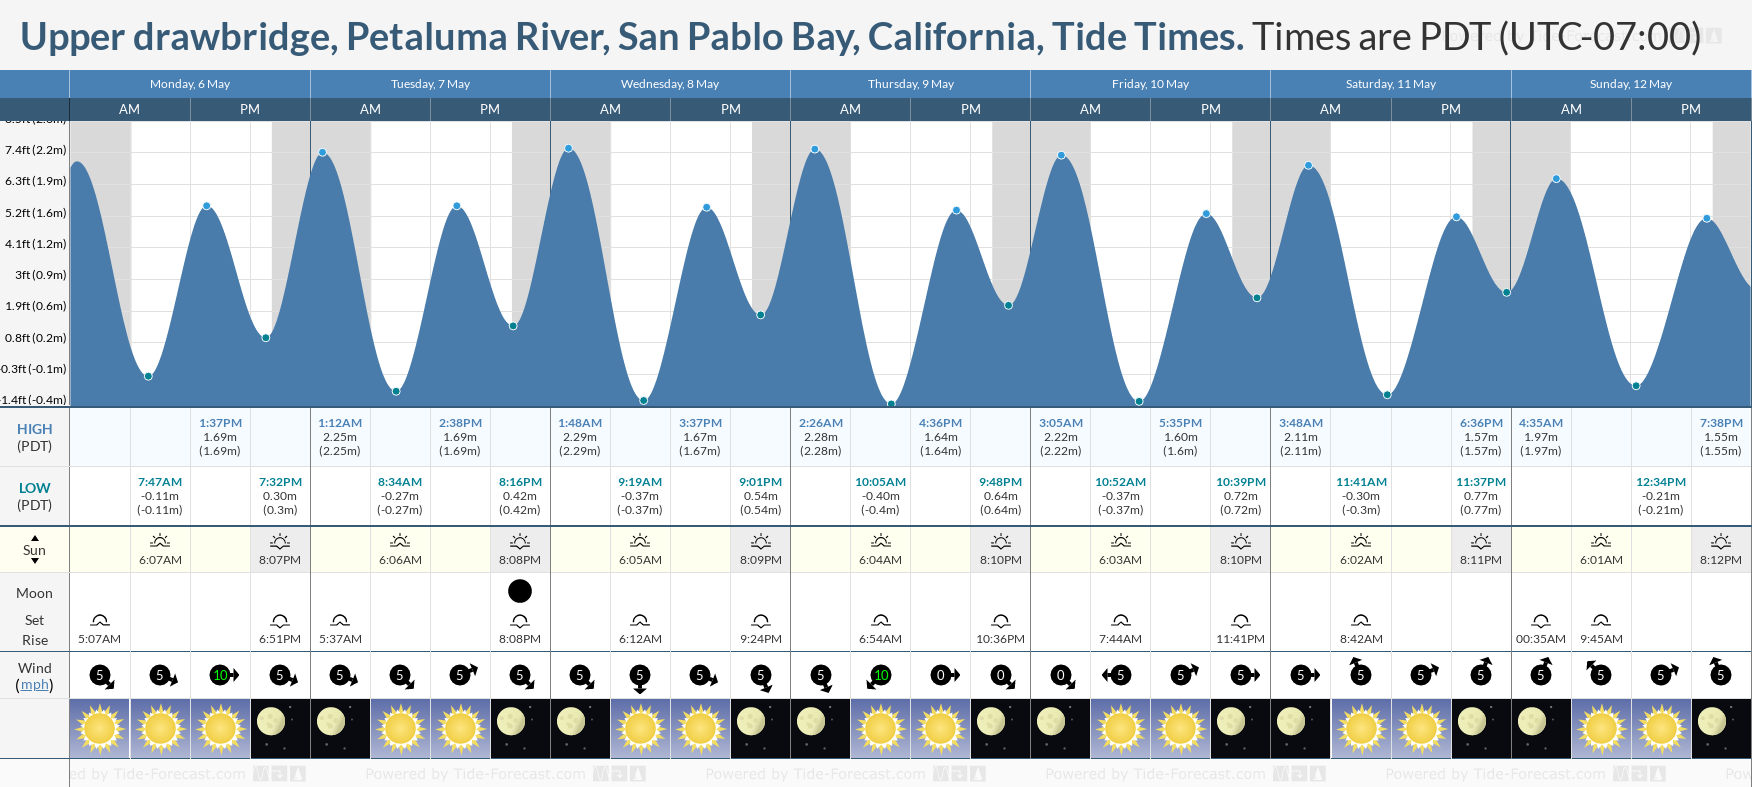 Upper drawbridge, Petaluma River, San Pablo Bay, California Tide Chart including high and low tide tide times for the next 7 days